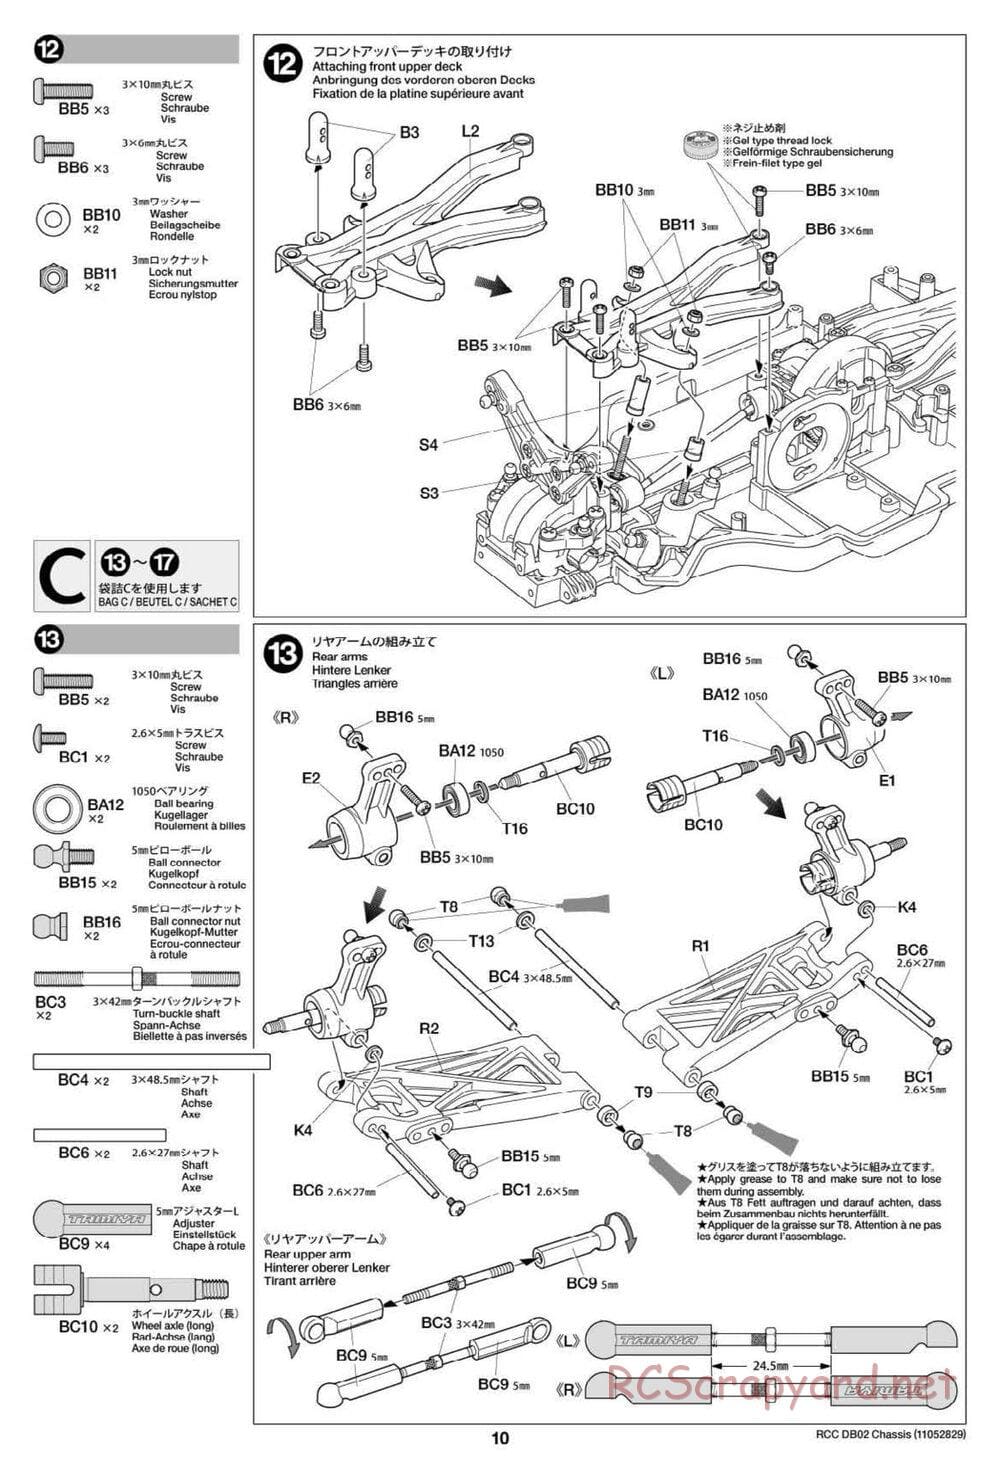 Tamiya - Leonis - DB-02 Chassis - Manual - Page 10